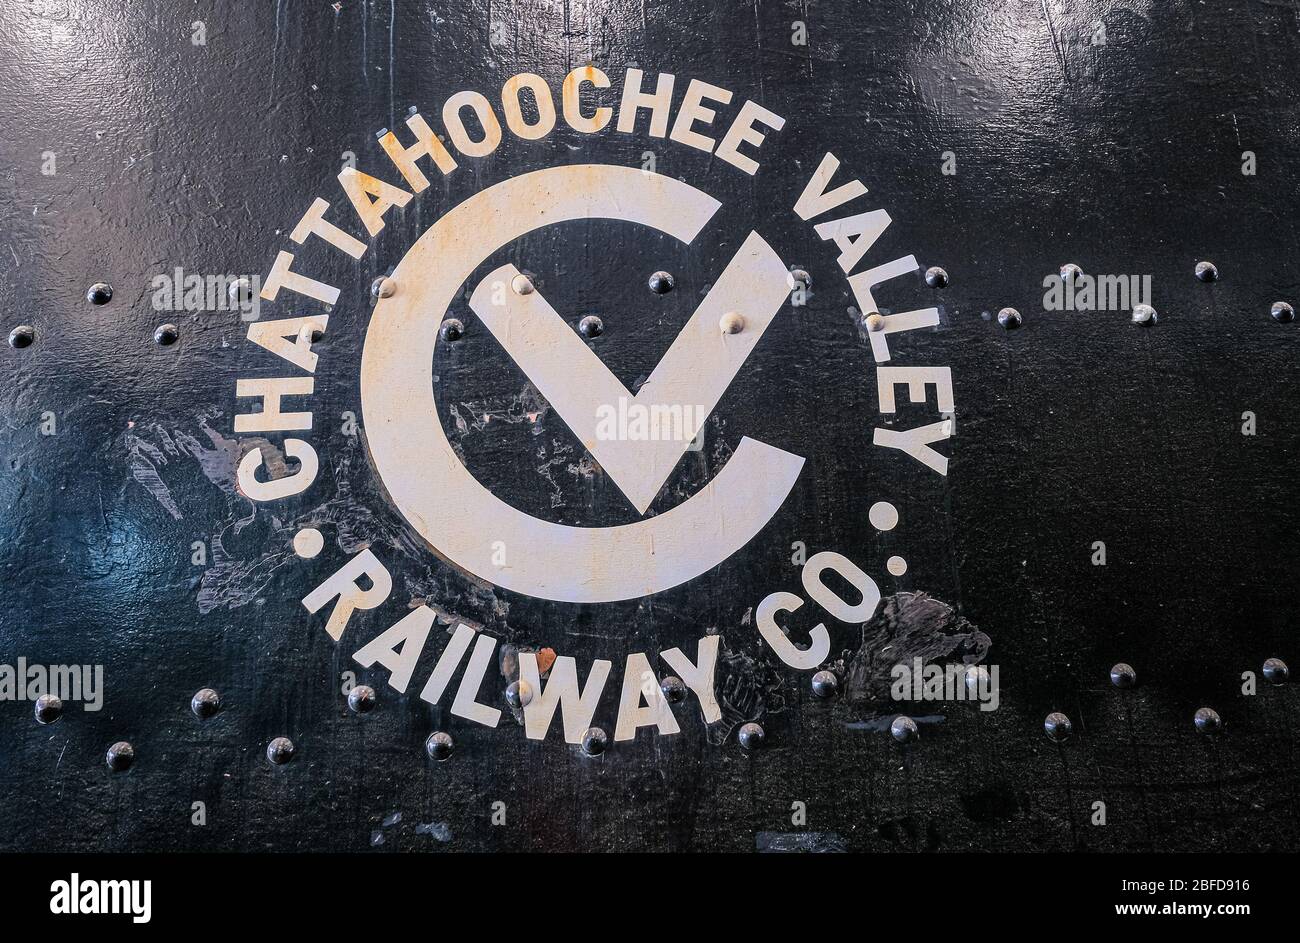 Chattahoochee Valley Railway Comapny Stock Photo